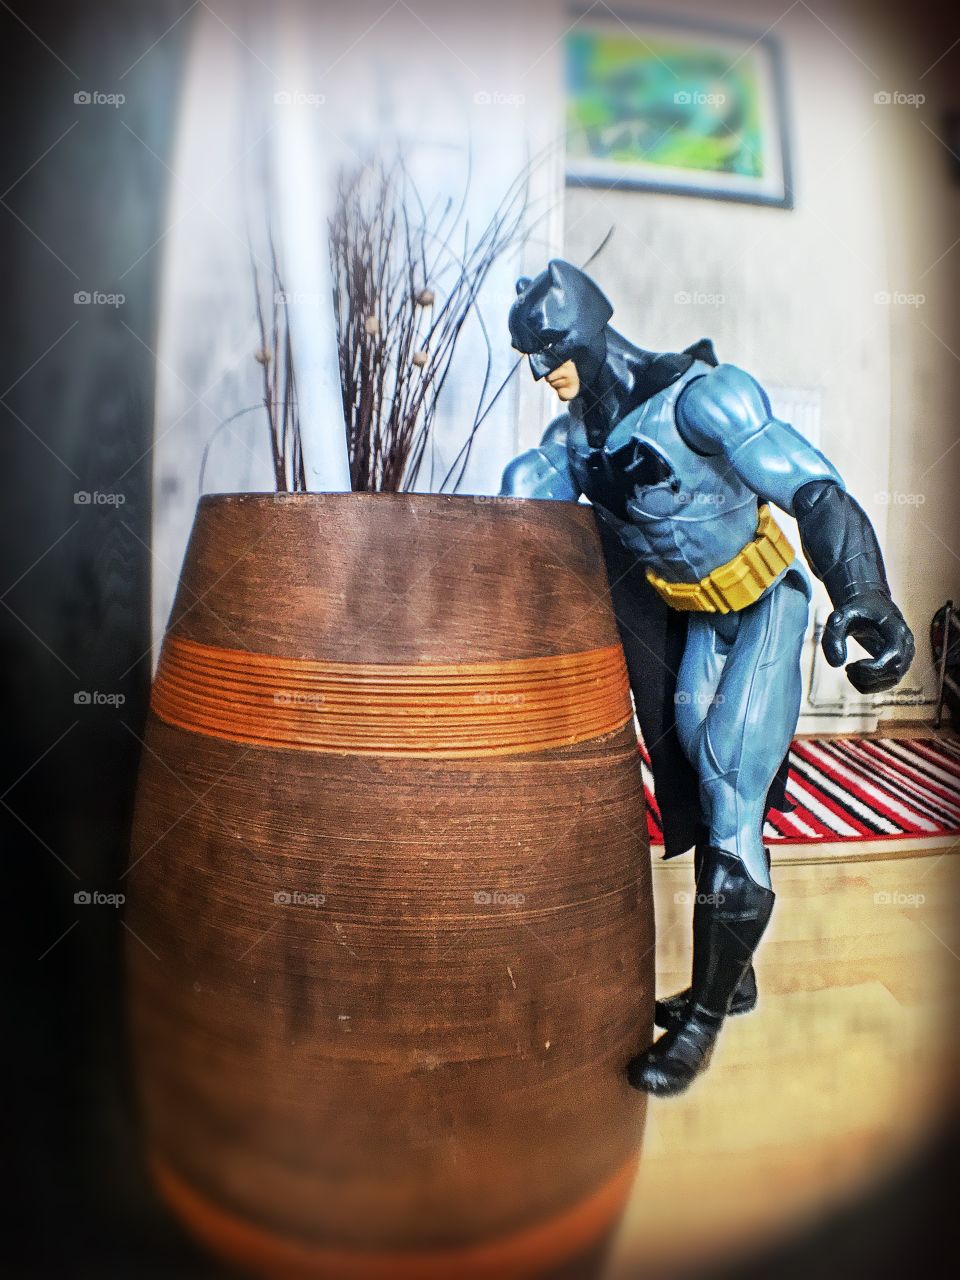 Batman 